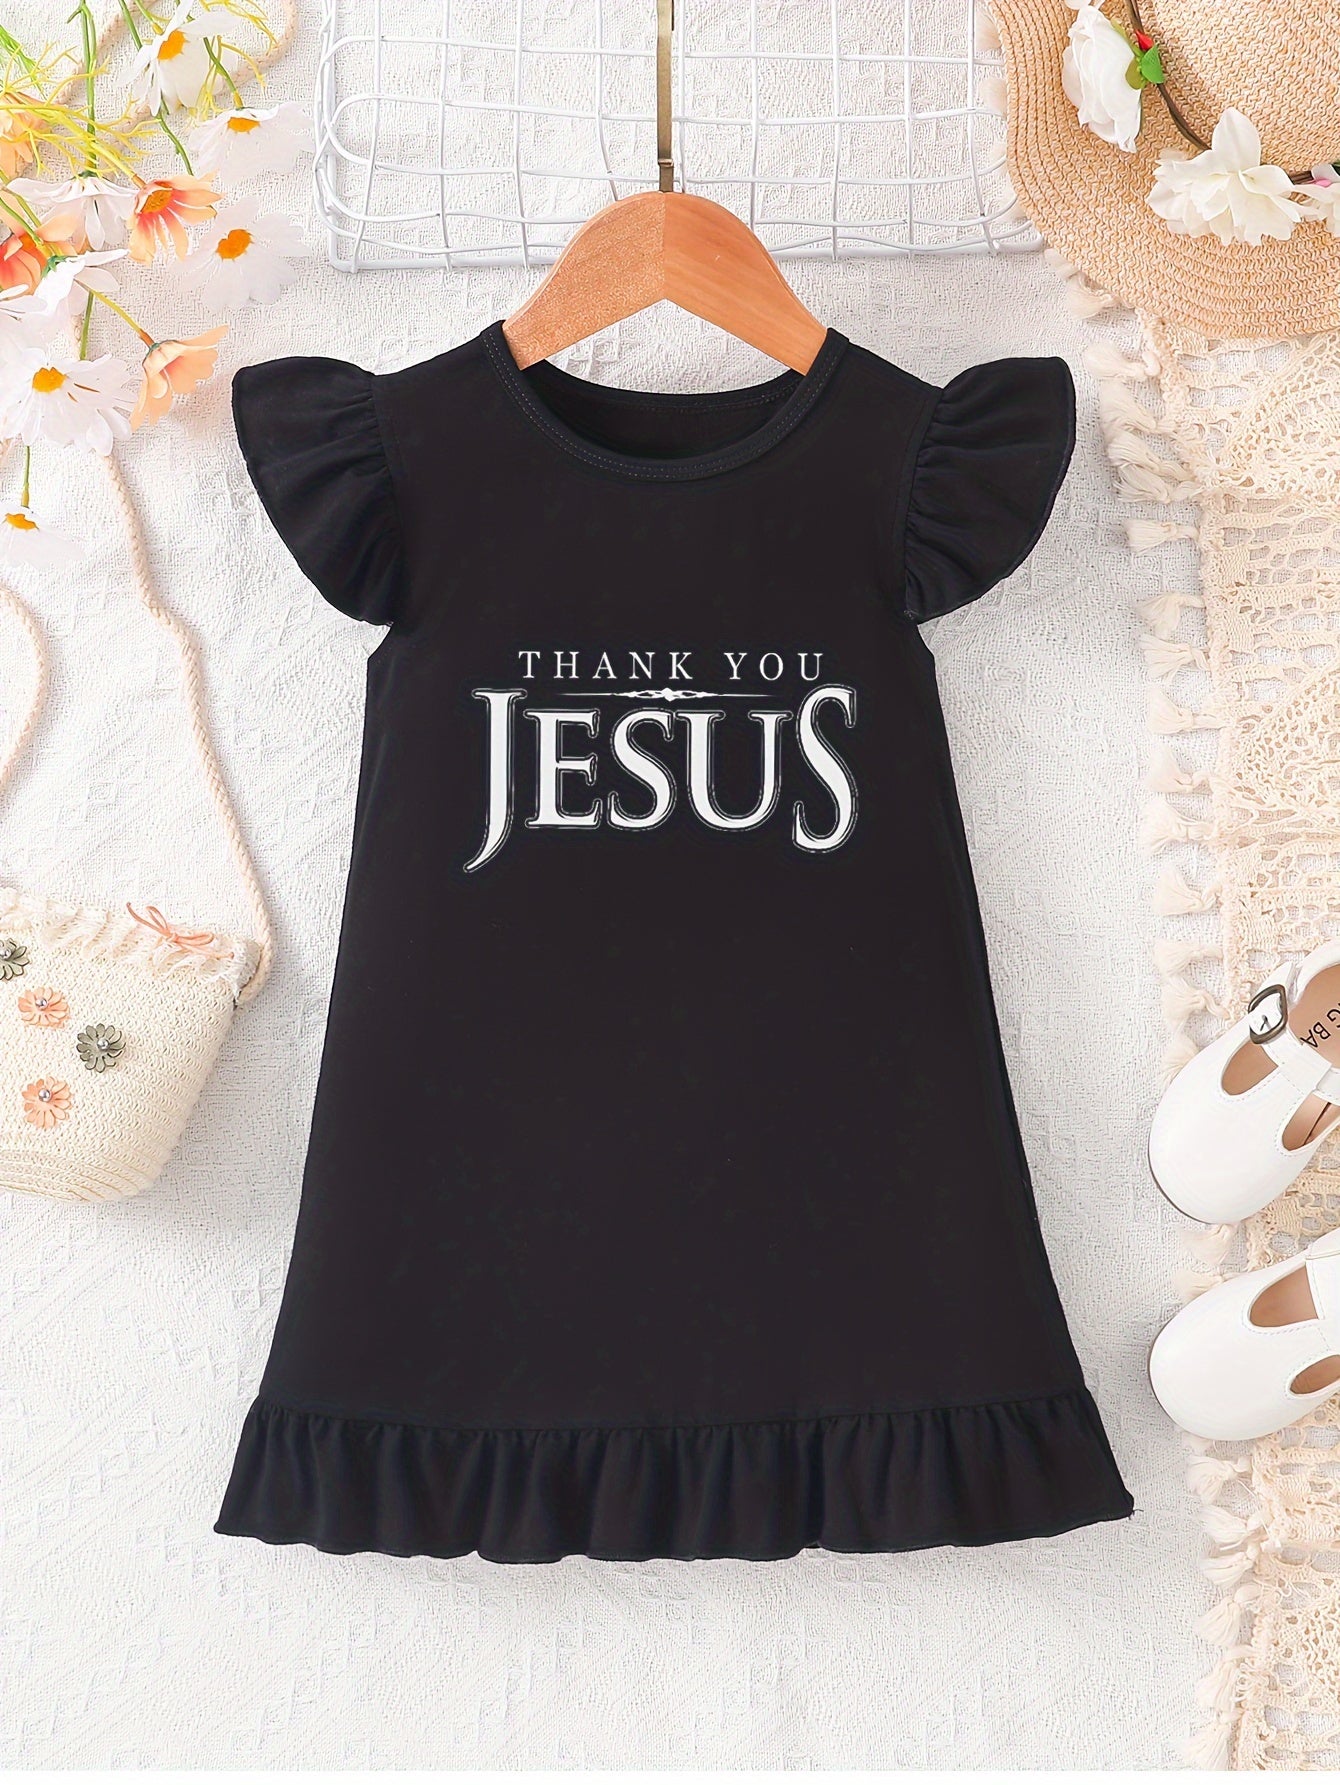 Thank You Jesus Christian Toddler Dress claimedbygoddesigns